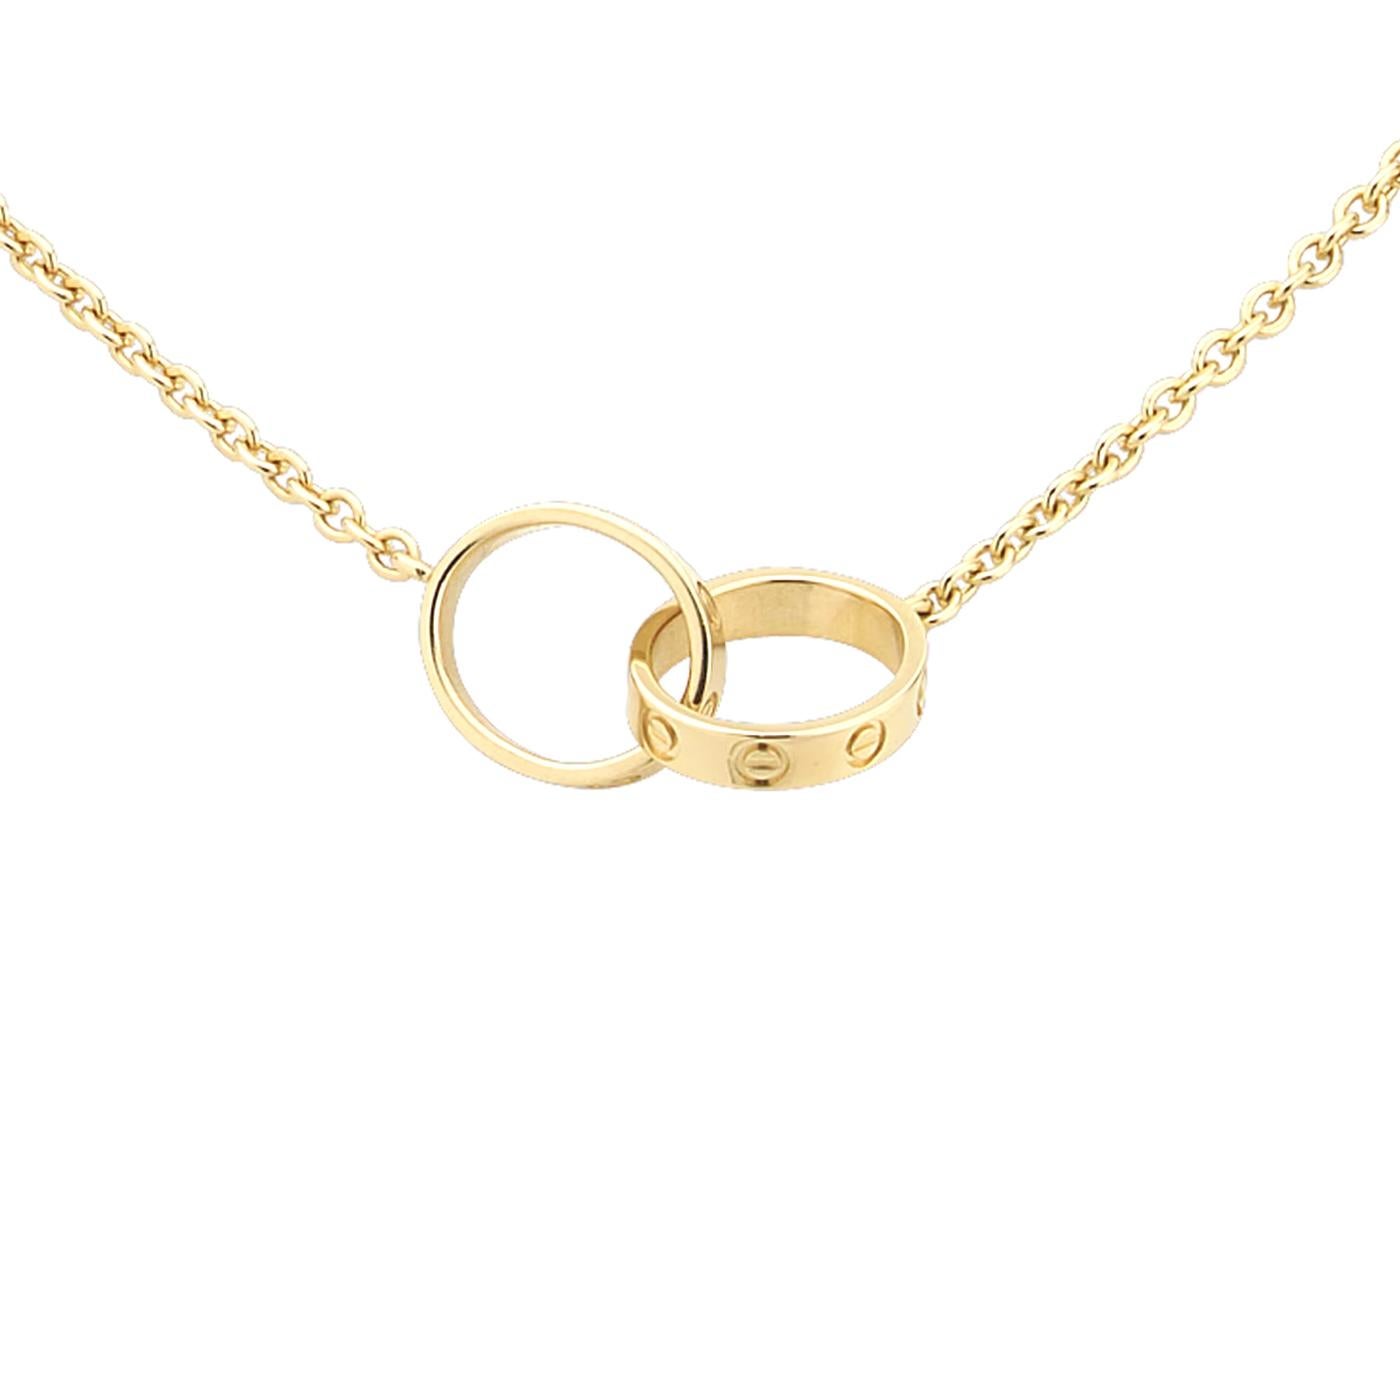 LOVE necklace, 18K yellow gold (750/1000). Inner diameter 8mm. Chain length: 440mm.

Details:
Brand: Cartier
Style: Love Necklace
Material: 18K Yellow Gold
Length: 440mm (17.36 Inches)
Theme: Romantic, Love
Inner Diameter: 8mm

Occasion: